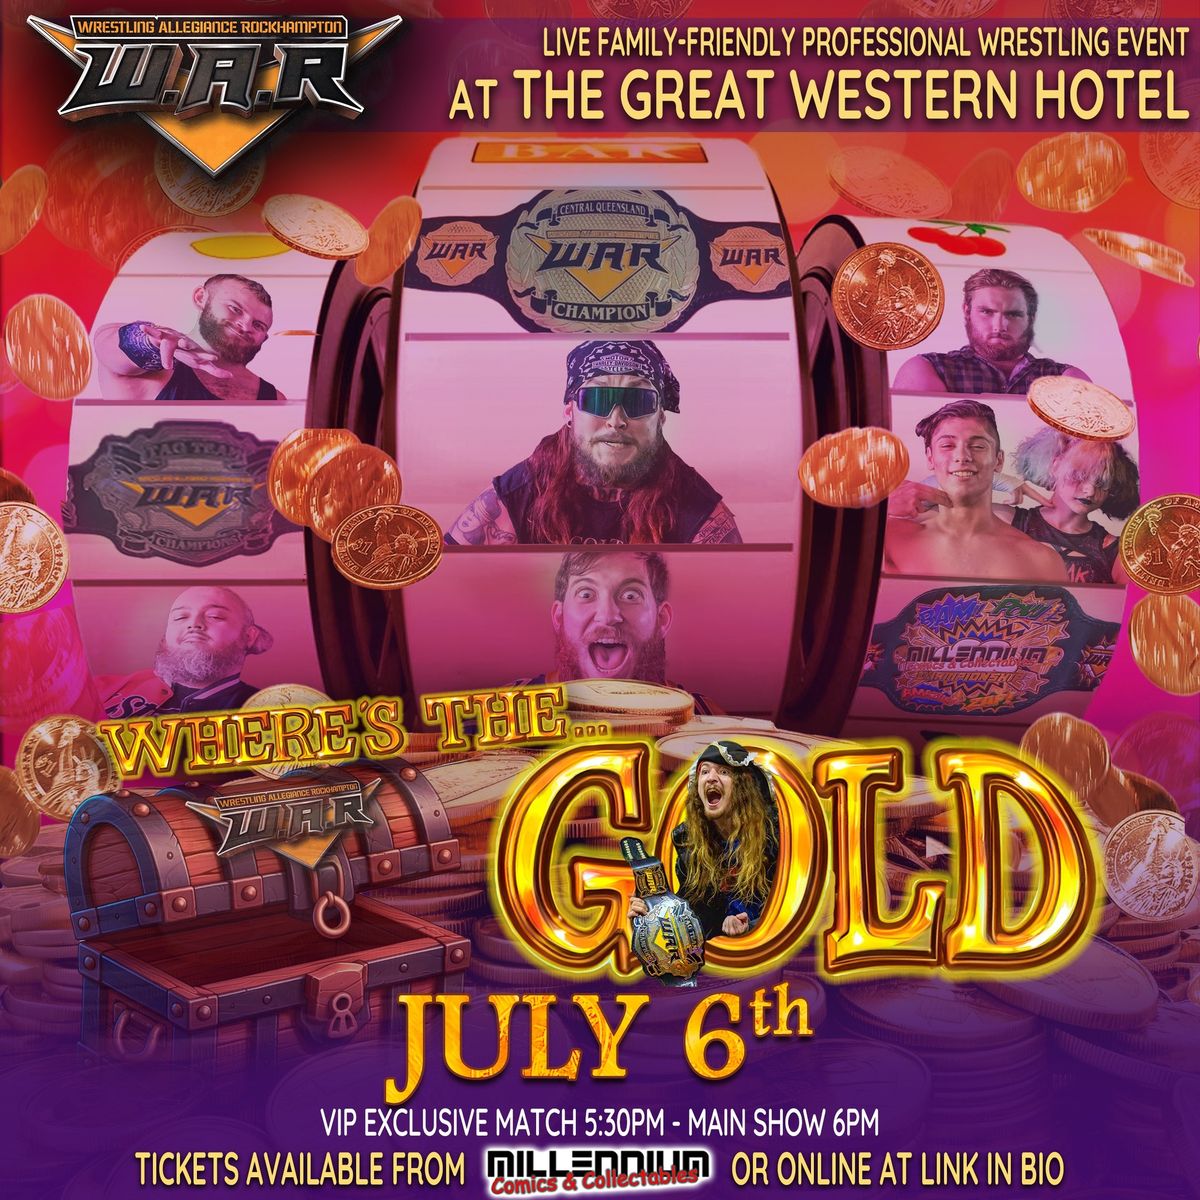 Wrestling Allegiance Rockhampton Presents \u2018Where\u2019s The Gold'